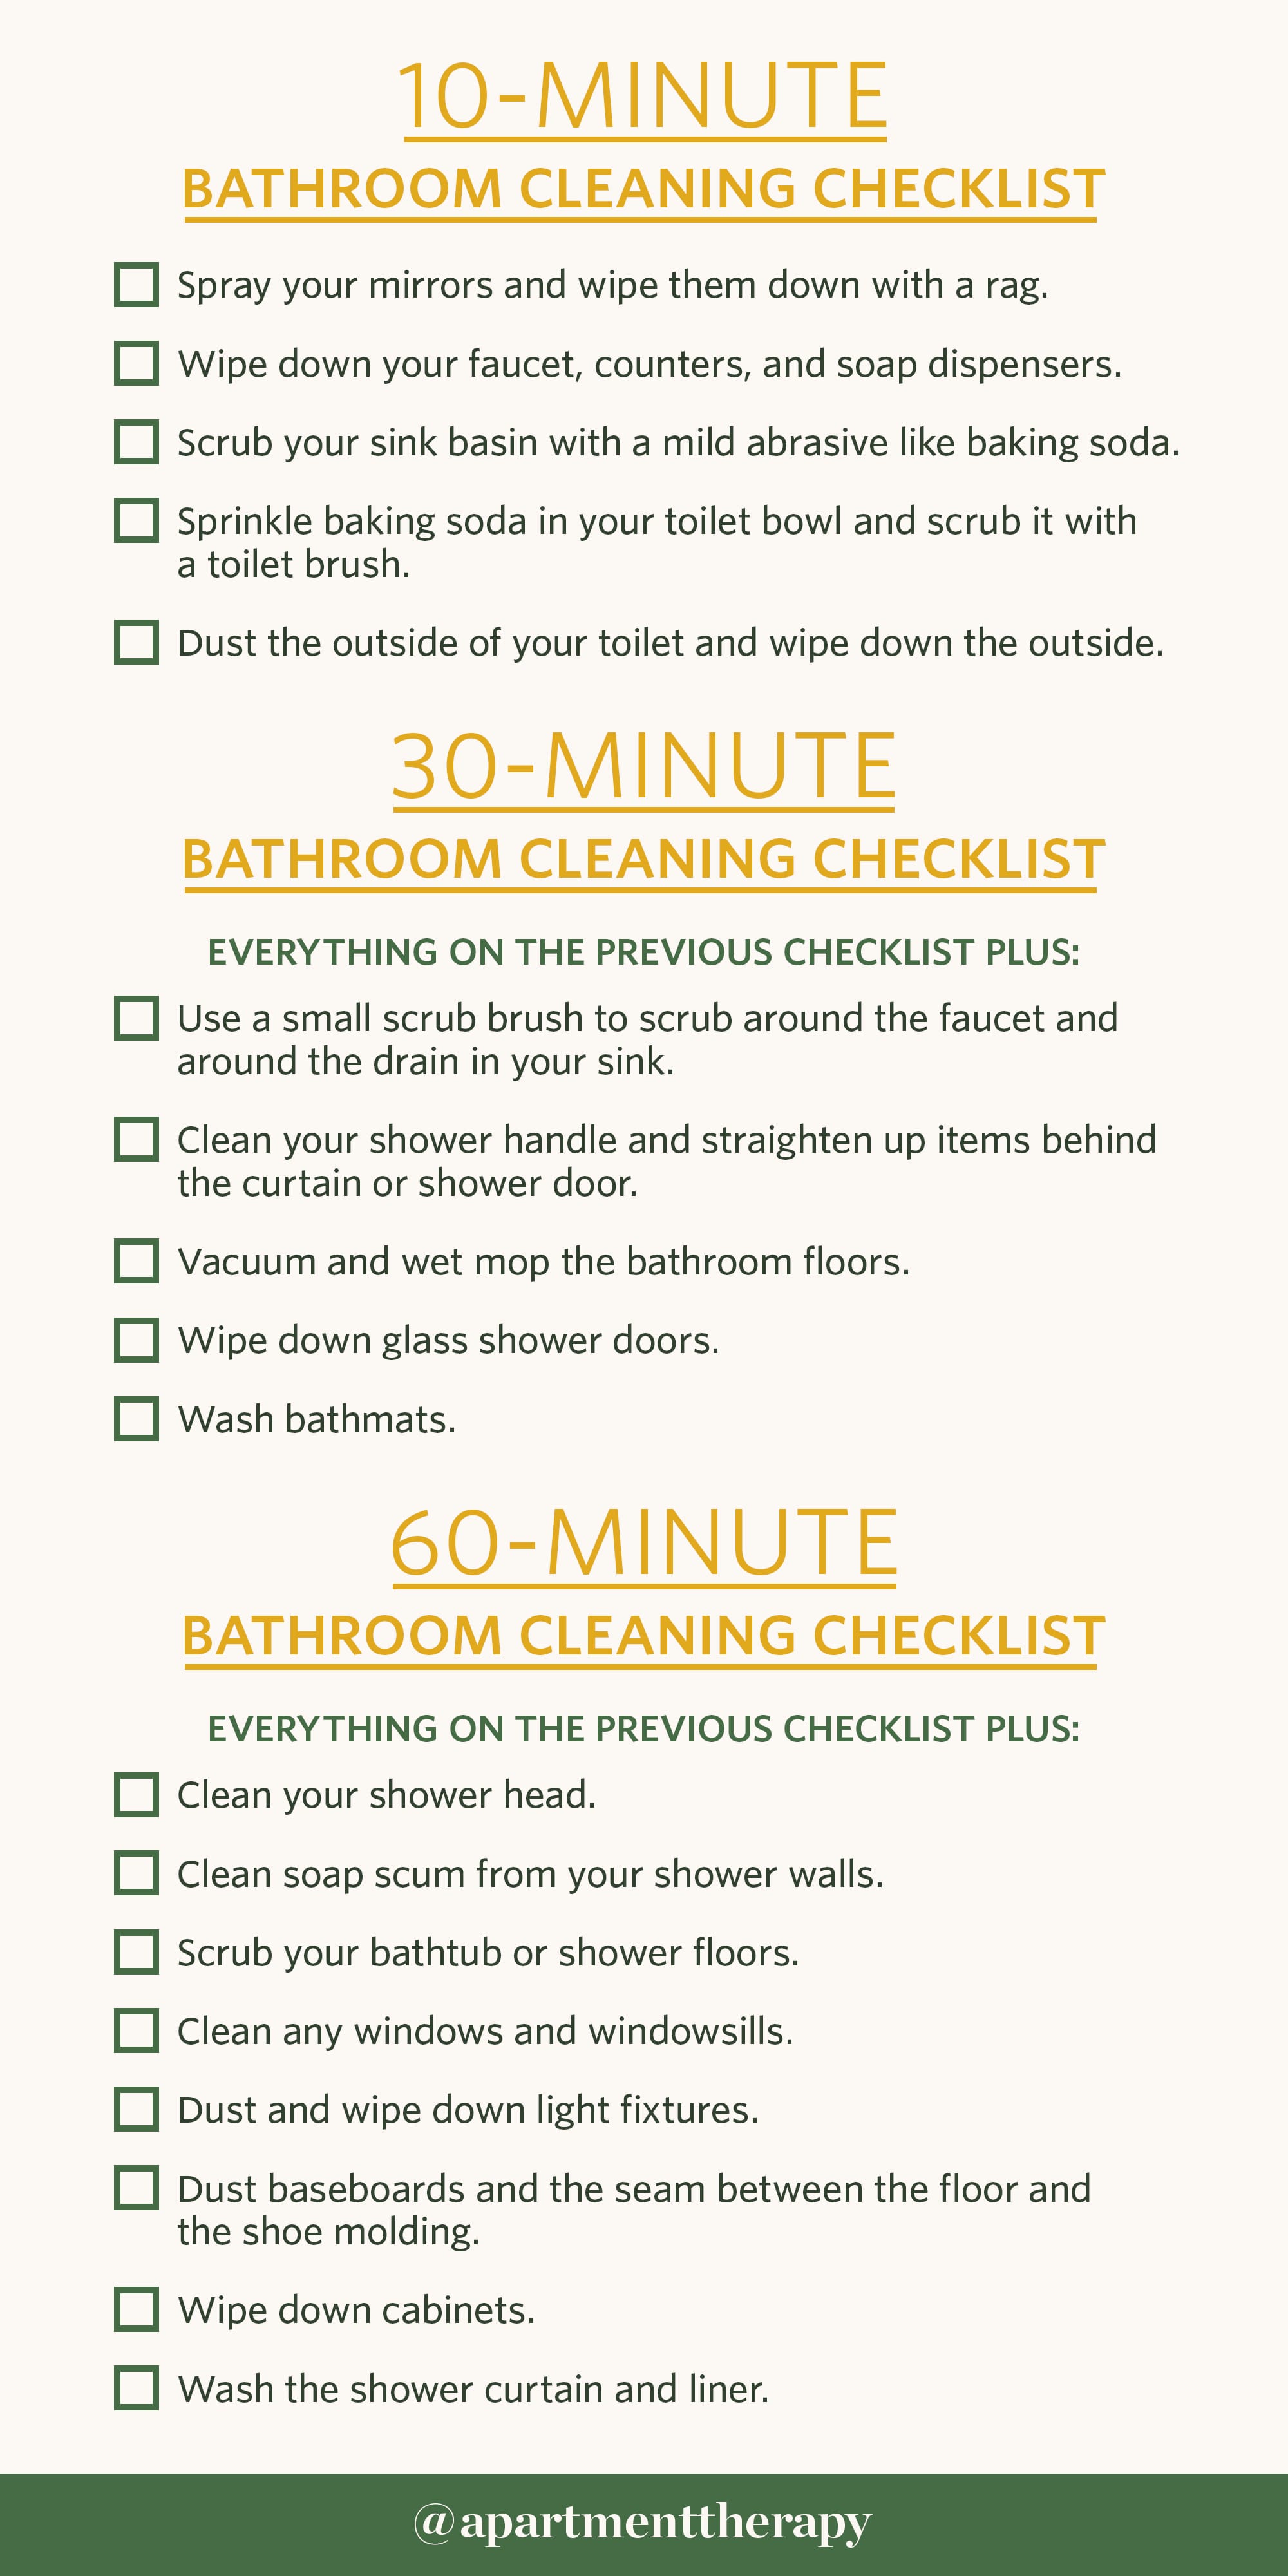 Deep-Clean Your Bathroom in 10 Steps